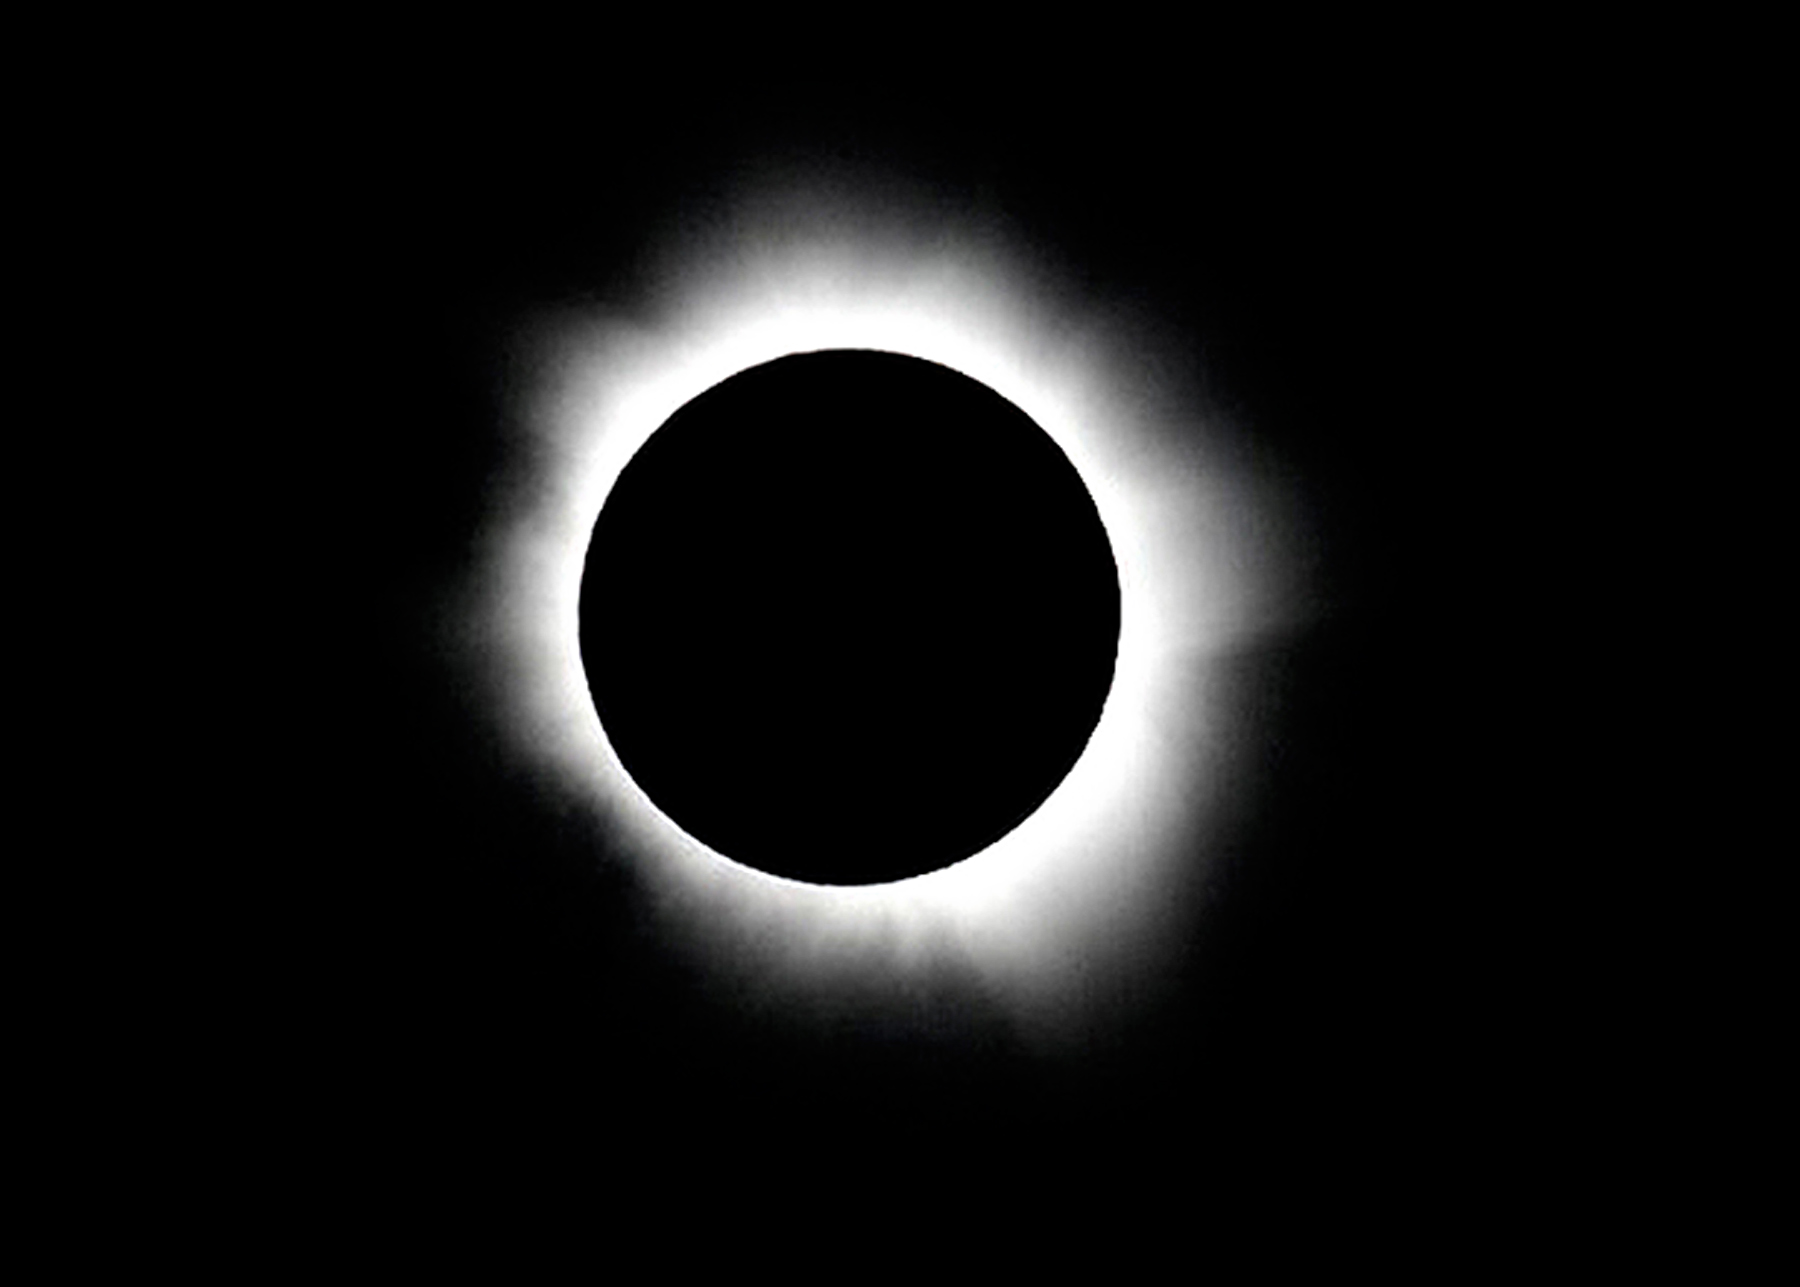 Eclipse 2012 - A93 - Full Corona - 3366